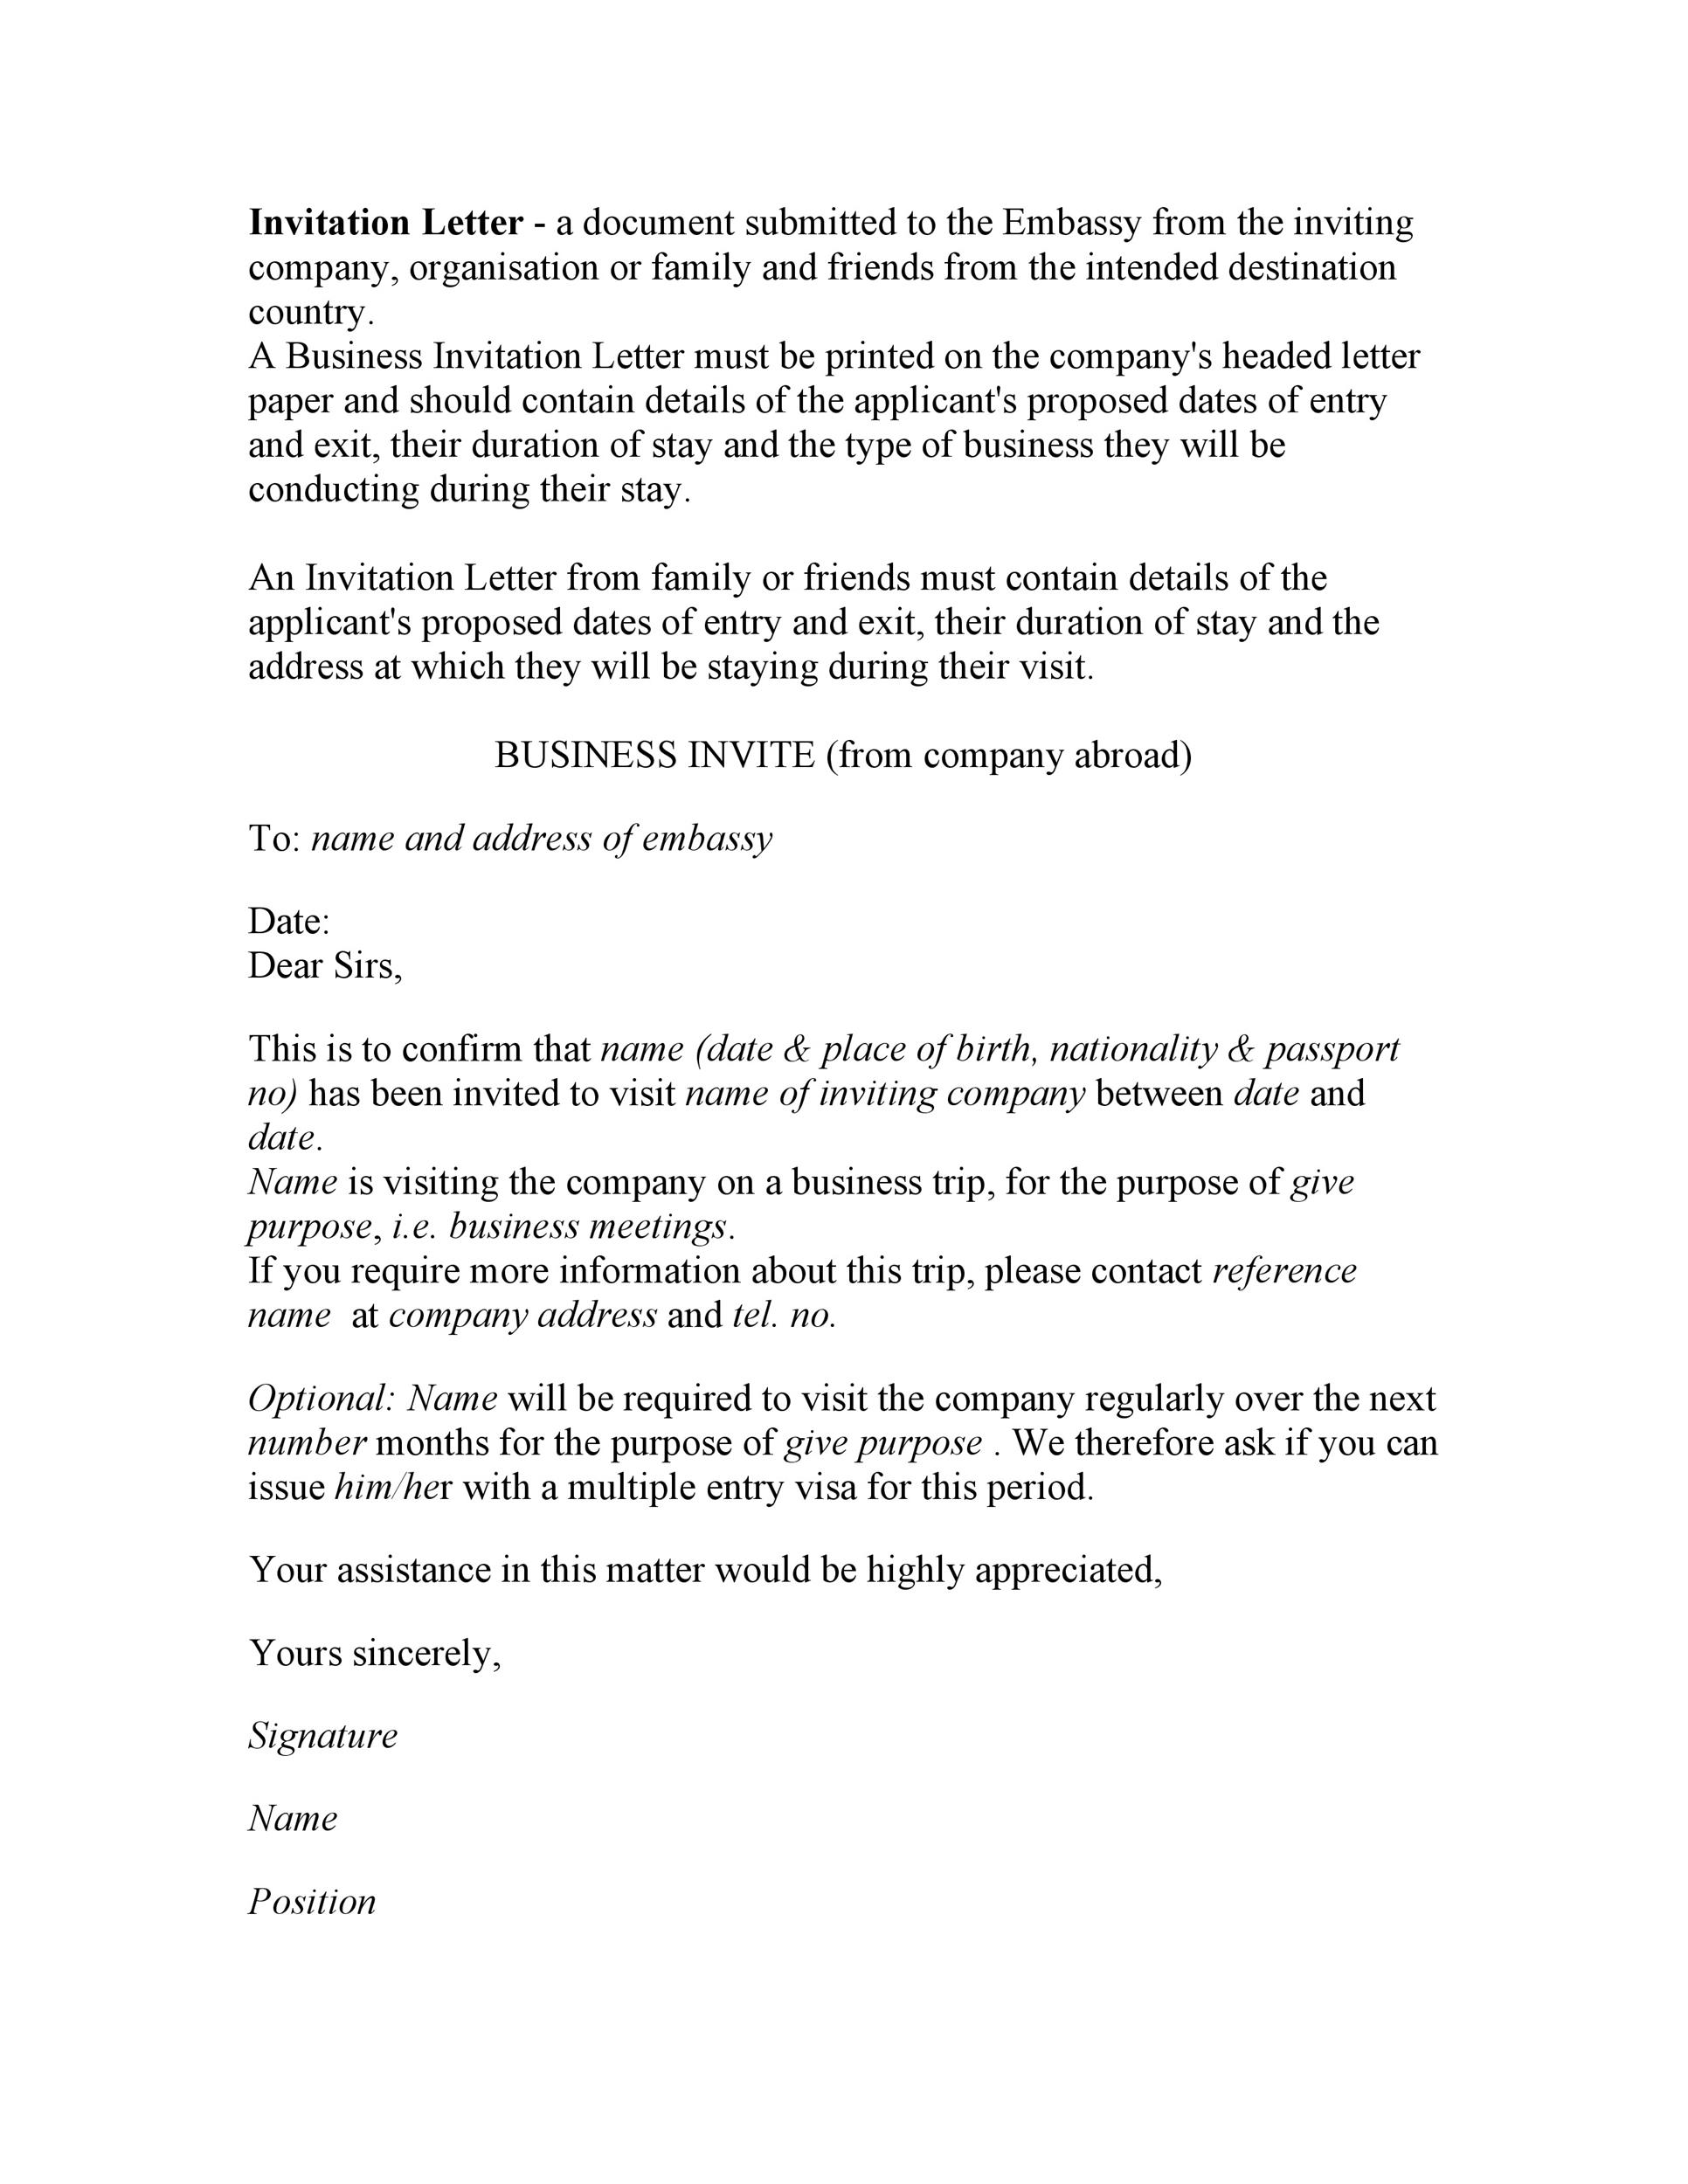 Formal Business Invitation Letter Sample - madisonazgard